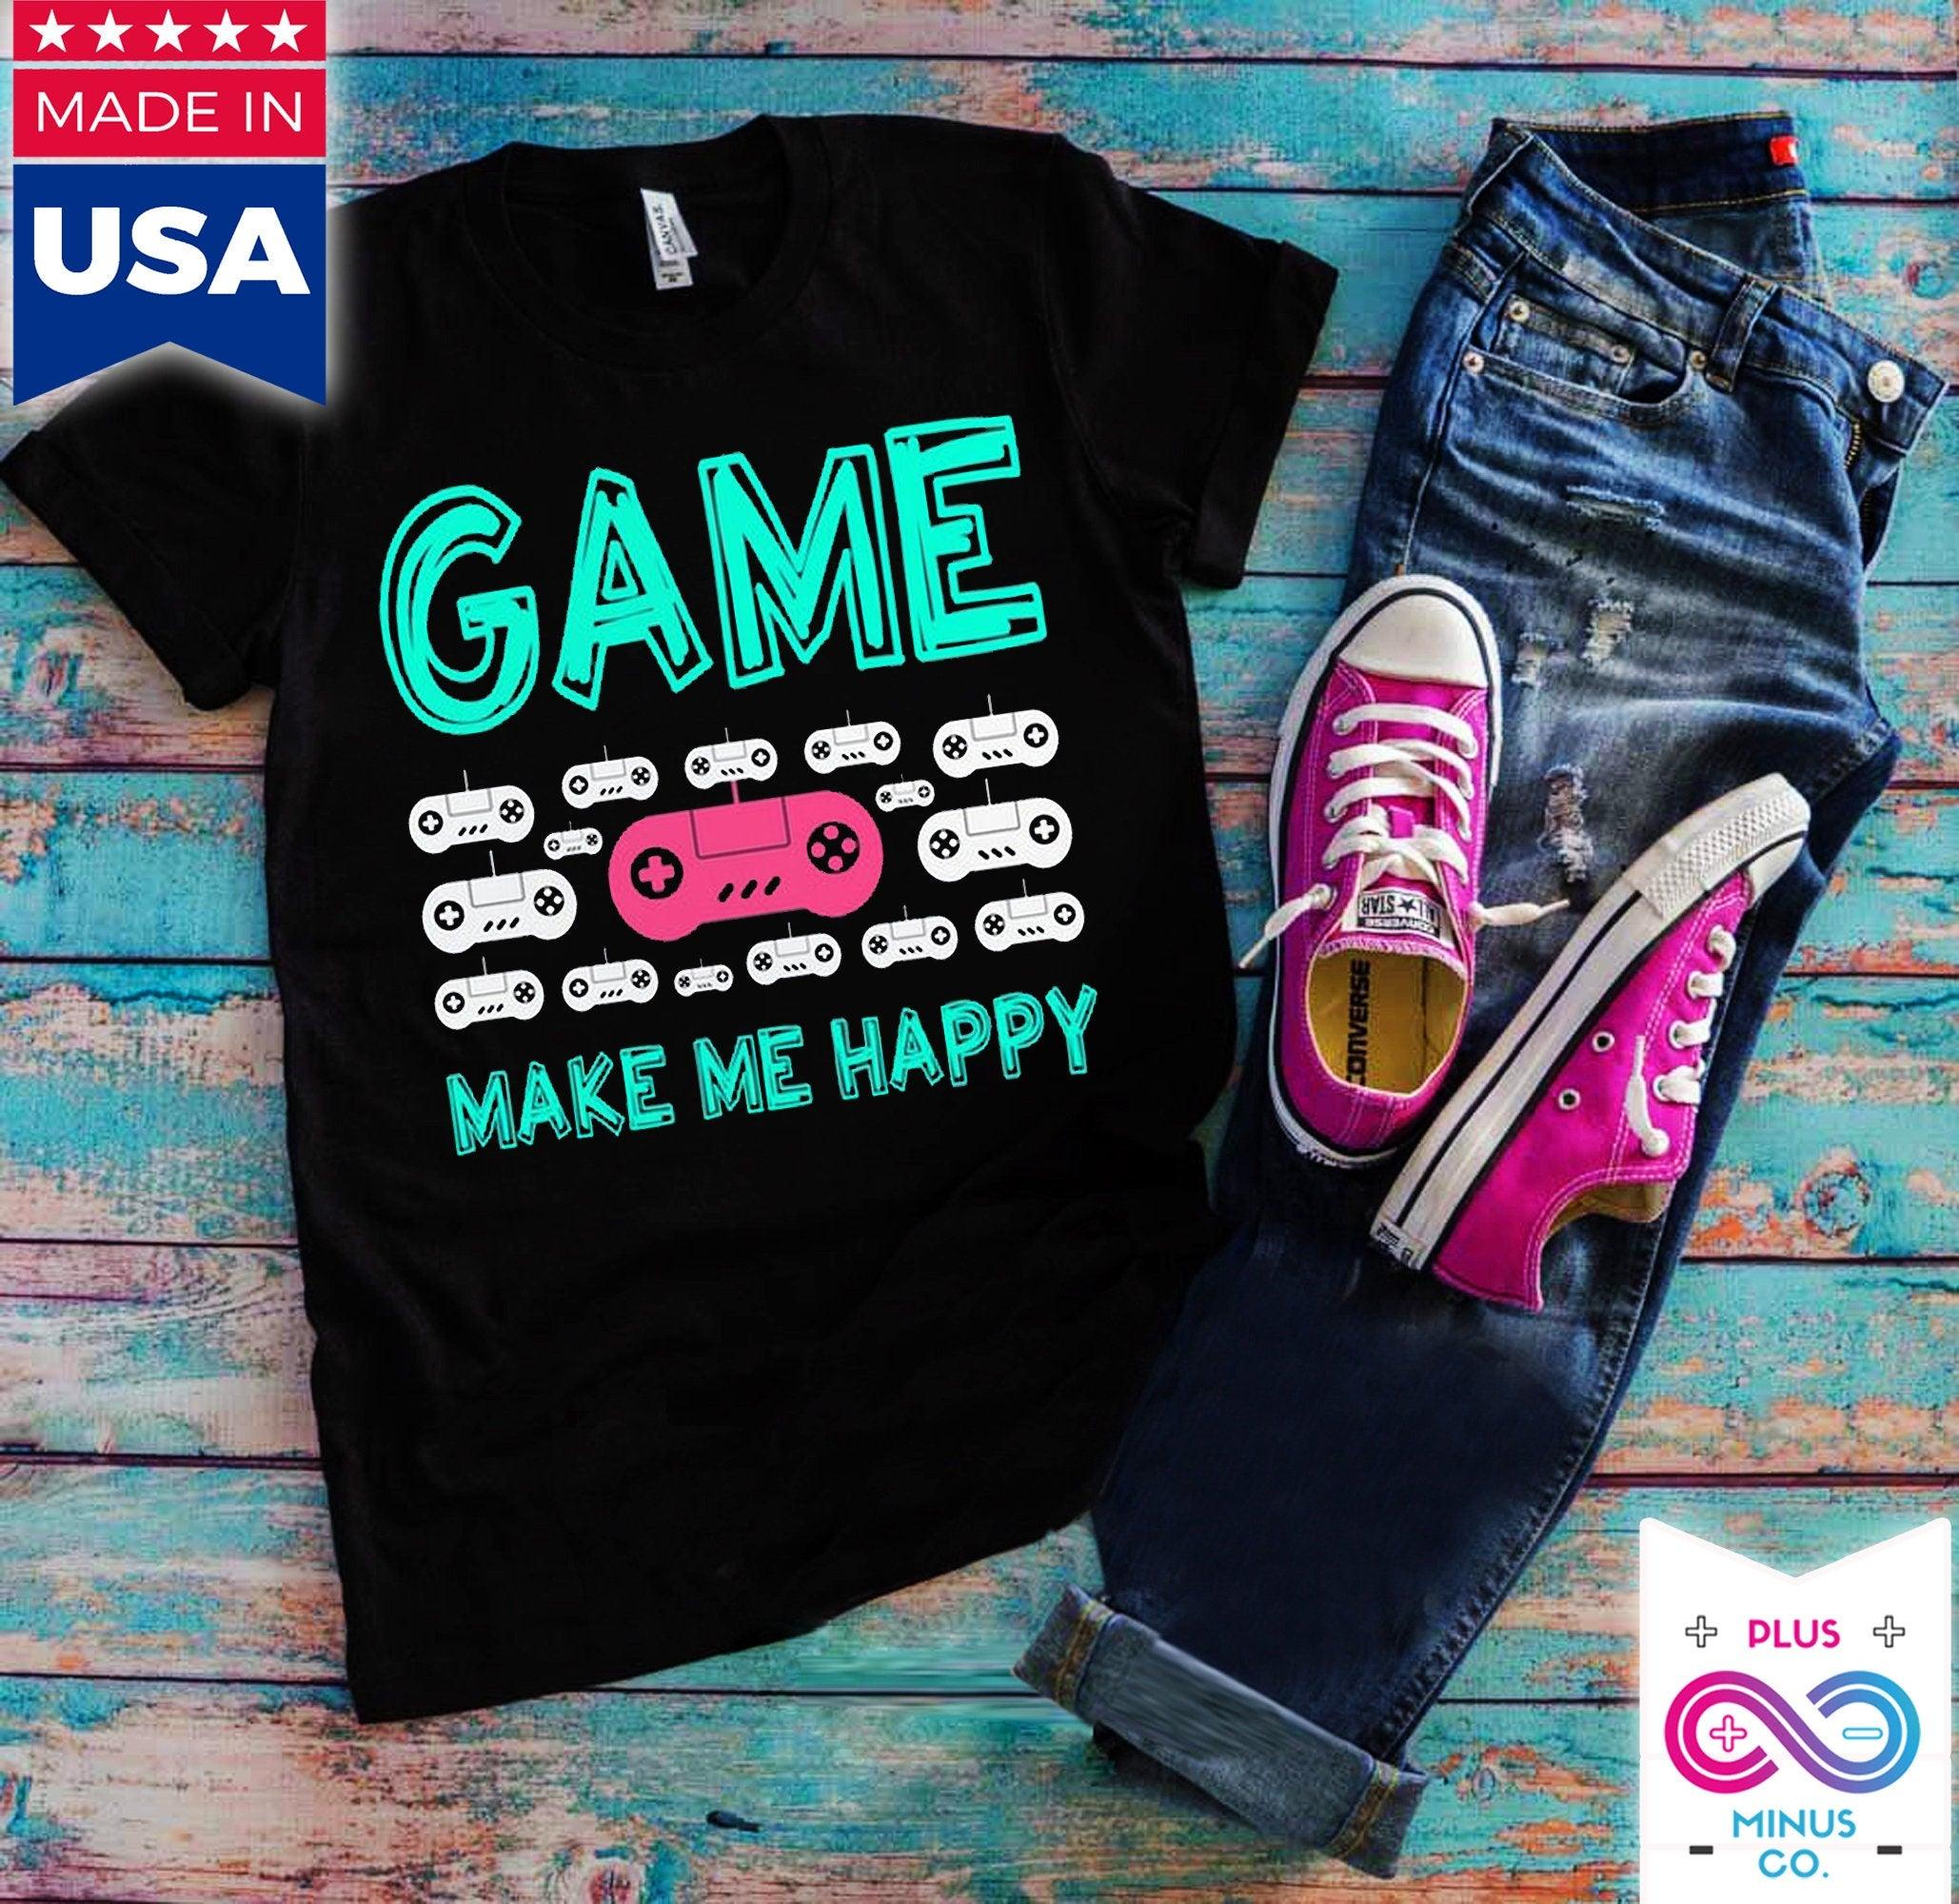 Game Make Me Happy T-Shirts, video gamer, game console,Funny Gamer Shirt || Gaming Tee Gamer Boyfriend - plusminusco.com